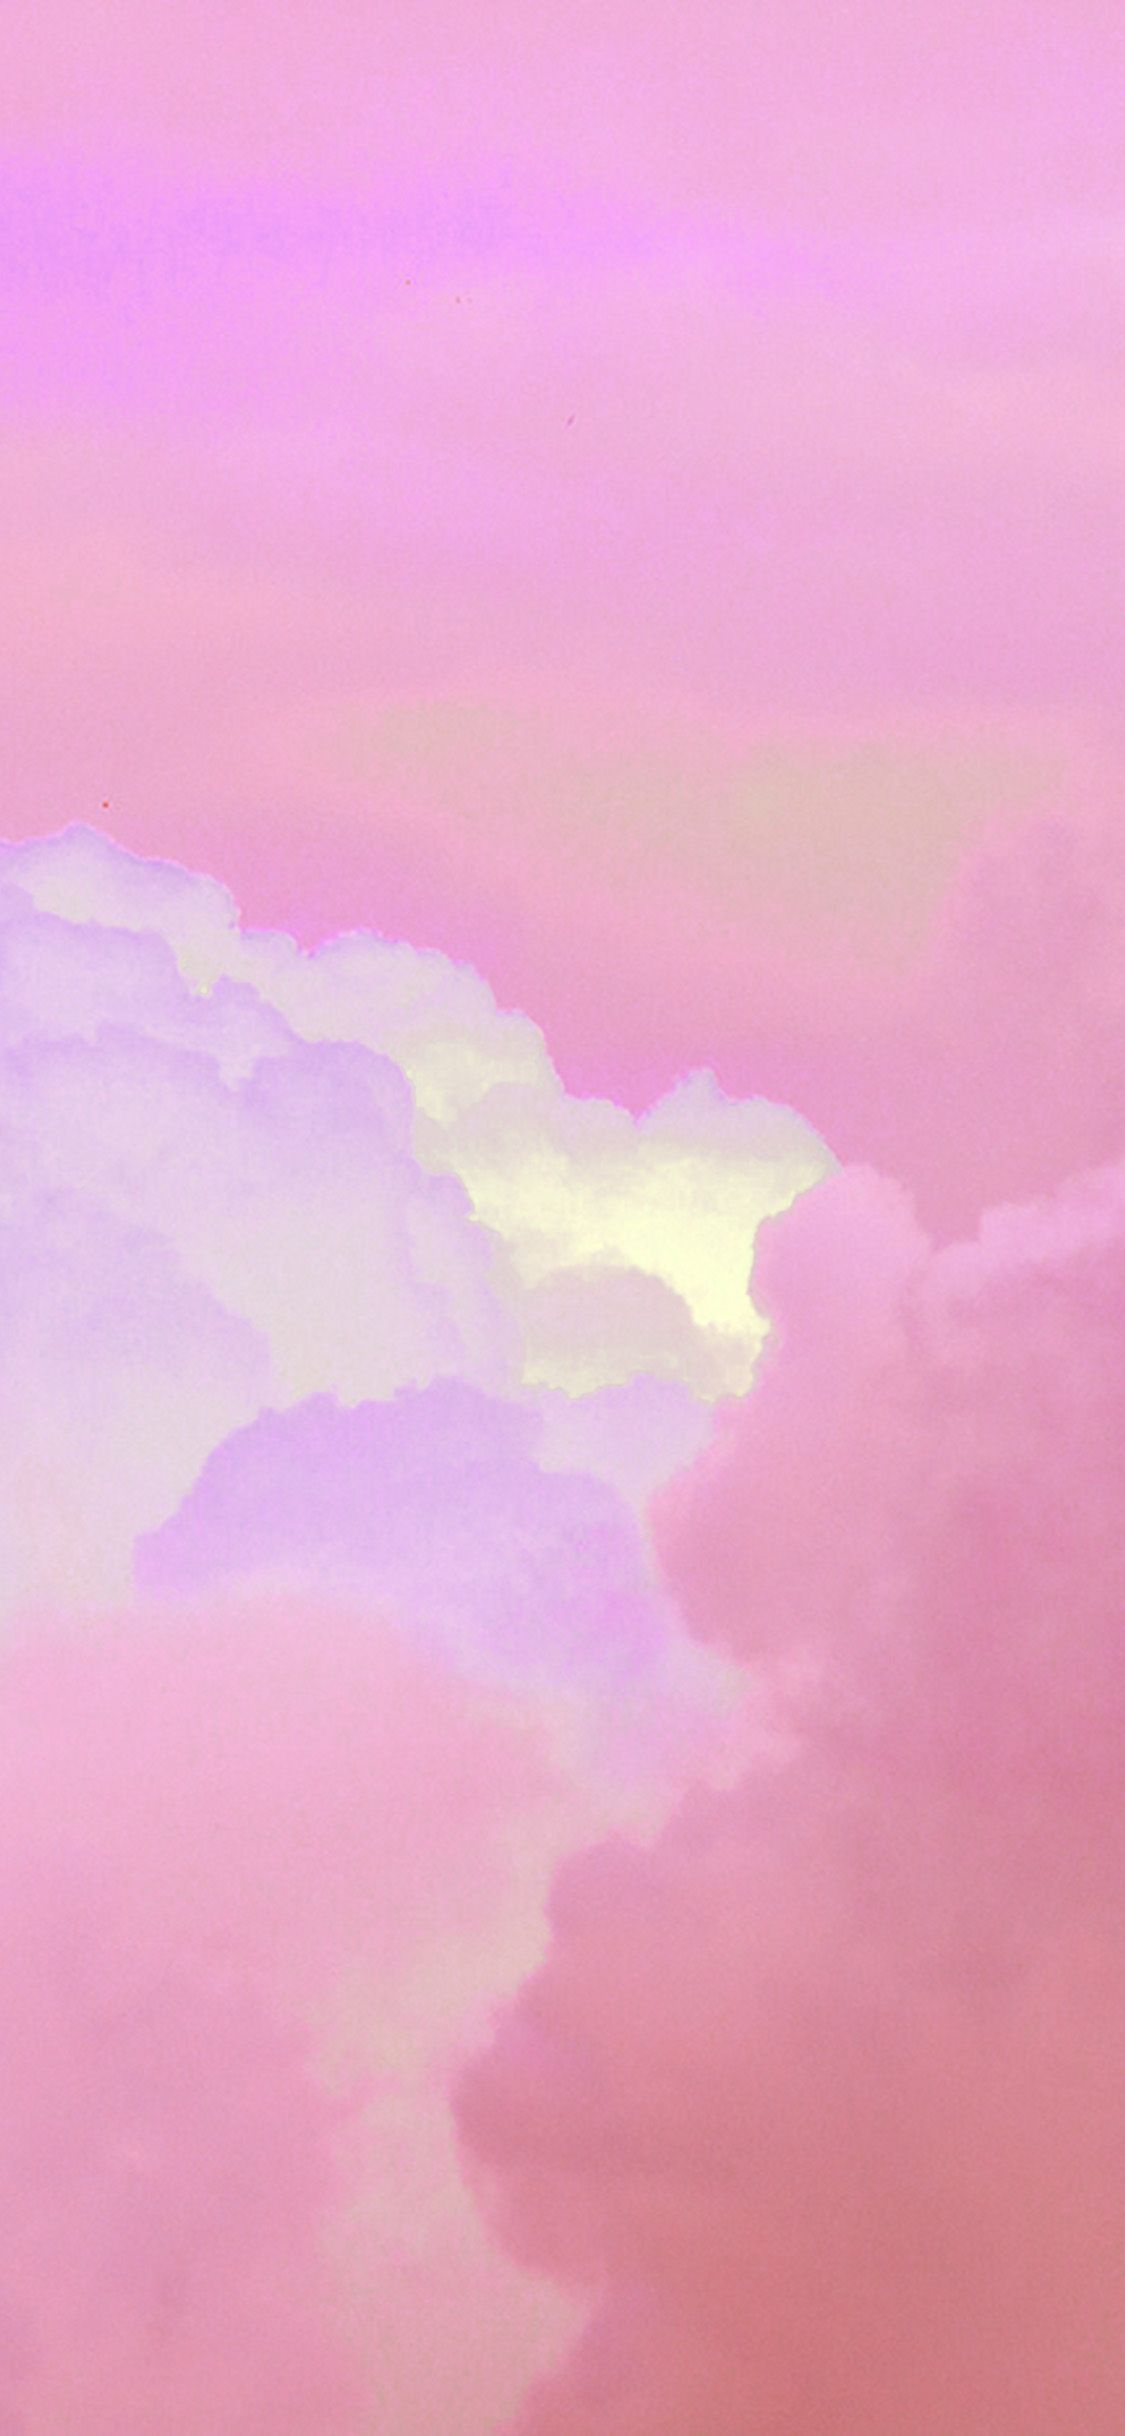 iPhone X wallpaper. cloud sky pink art